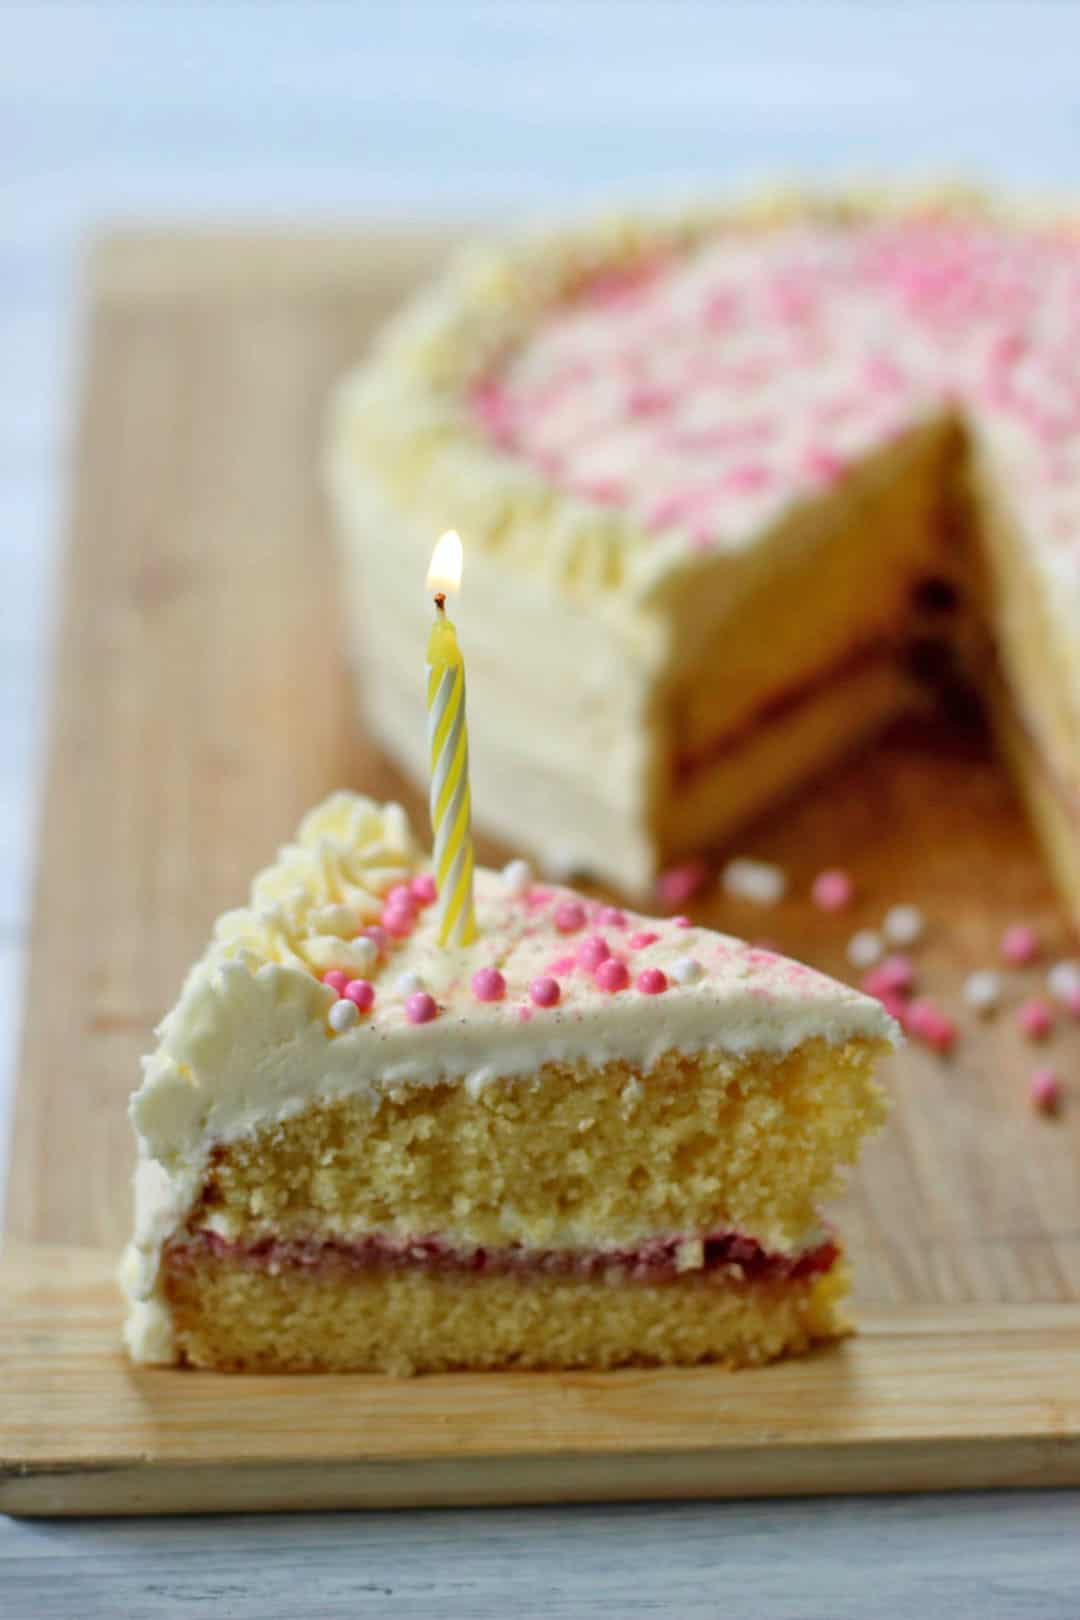 Best ideas about Vanilla Birthday Cake
. Save or Pin Vanilla Birthday Cake Now.